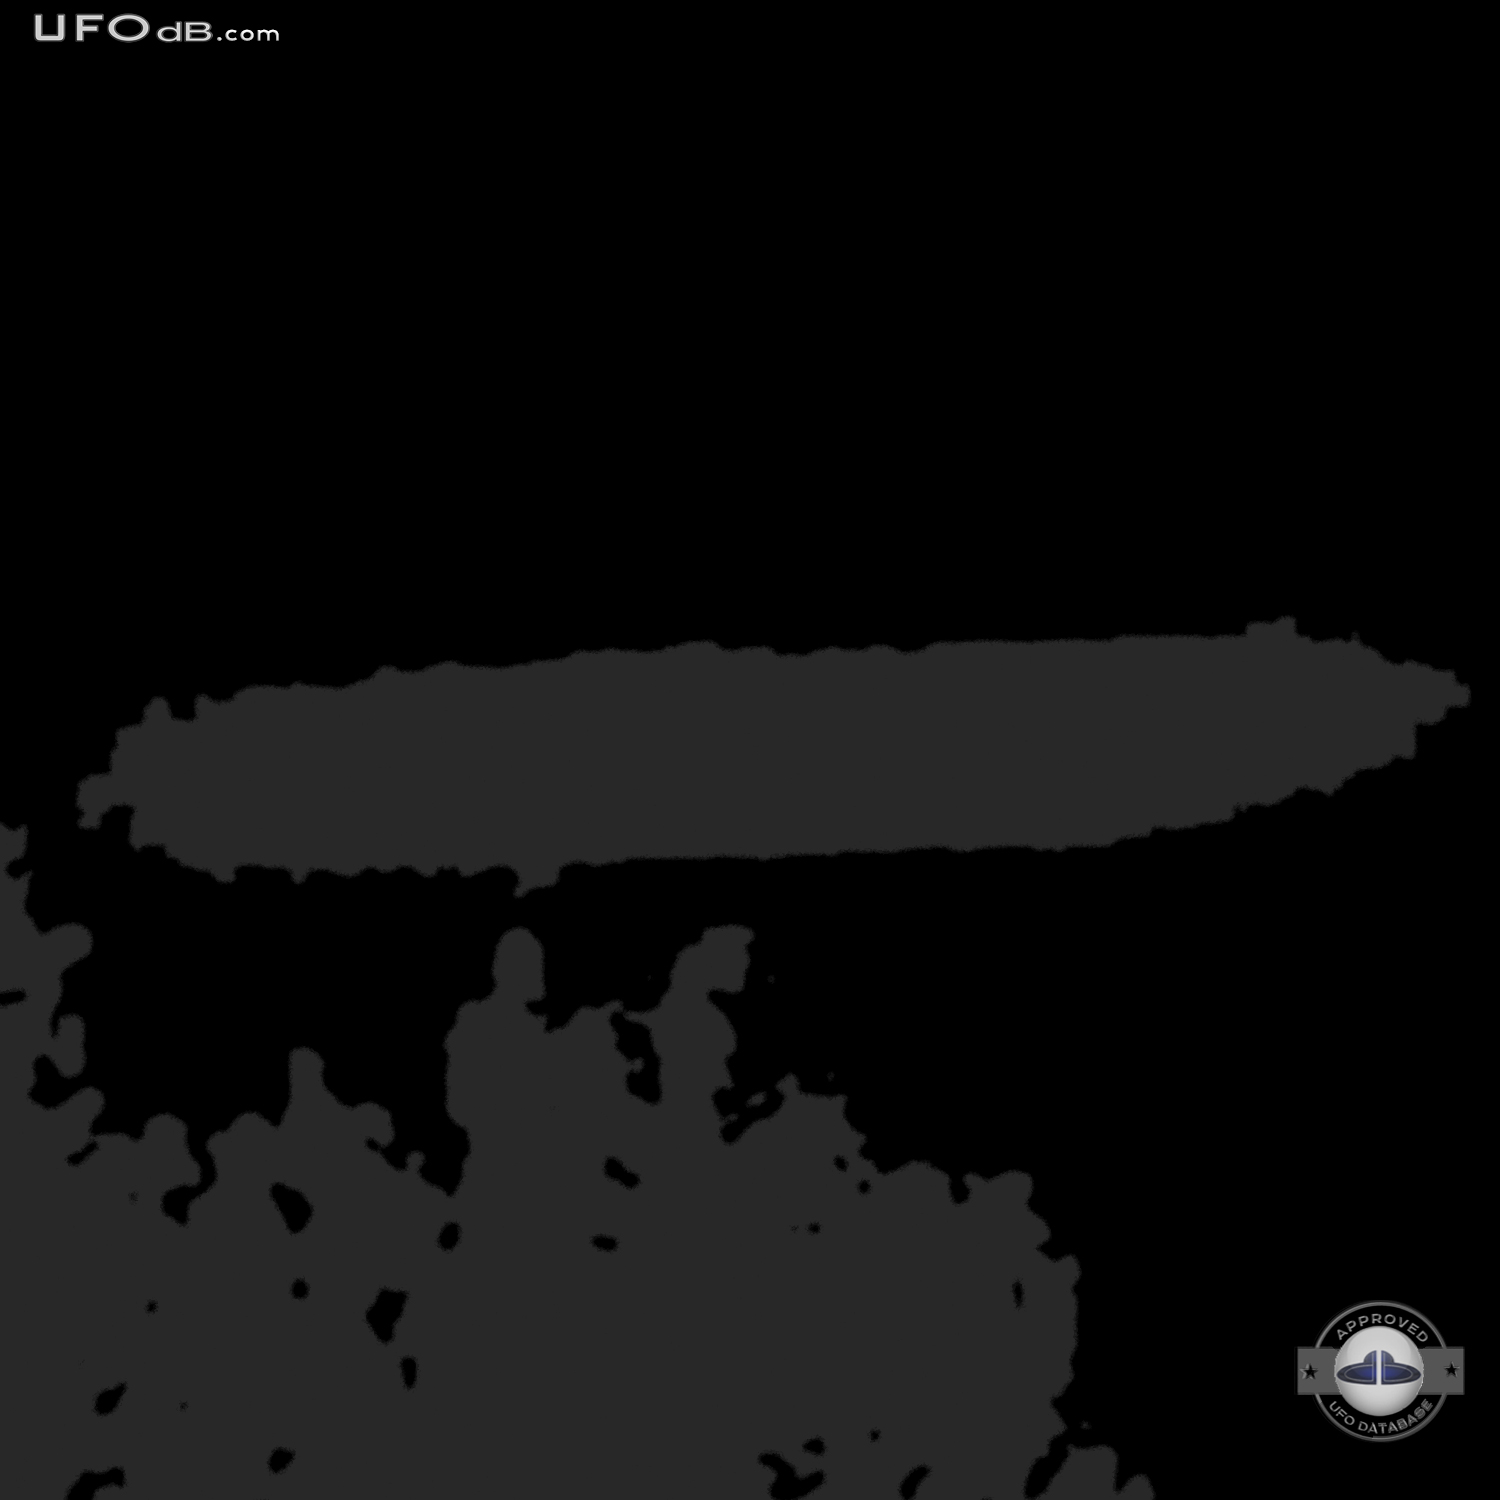 Bradley Ponds Fisherman UFO picture | Lincolnshire UK | April 23 2011 UFO Picture #301-6